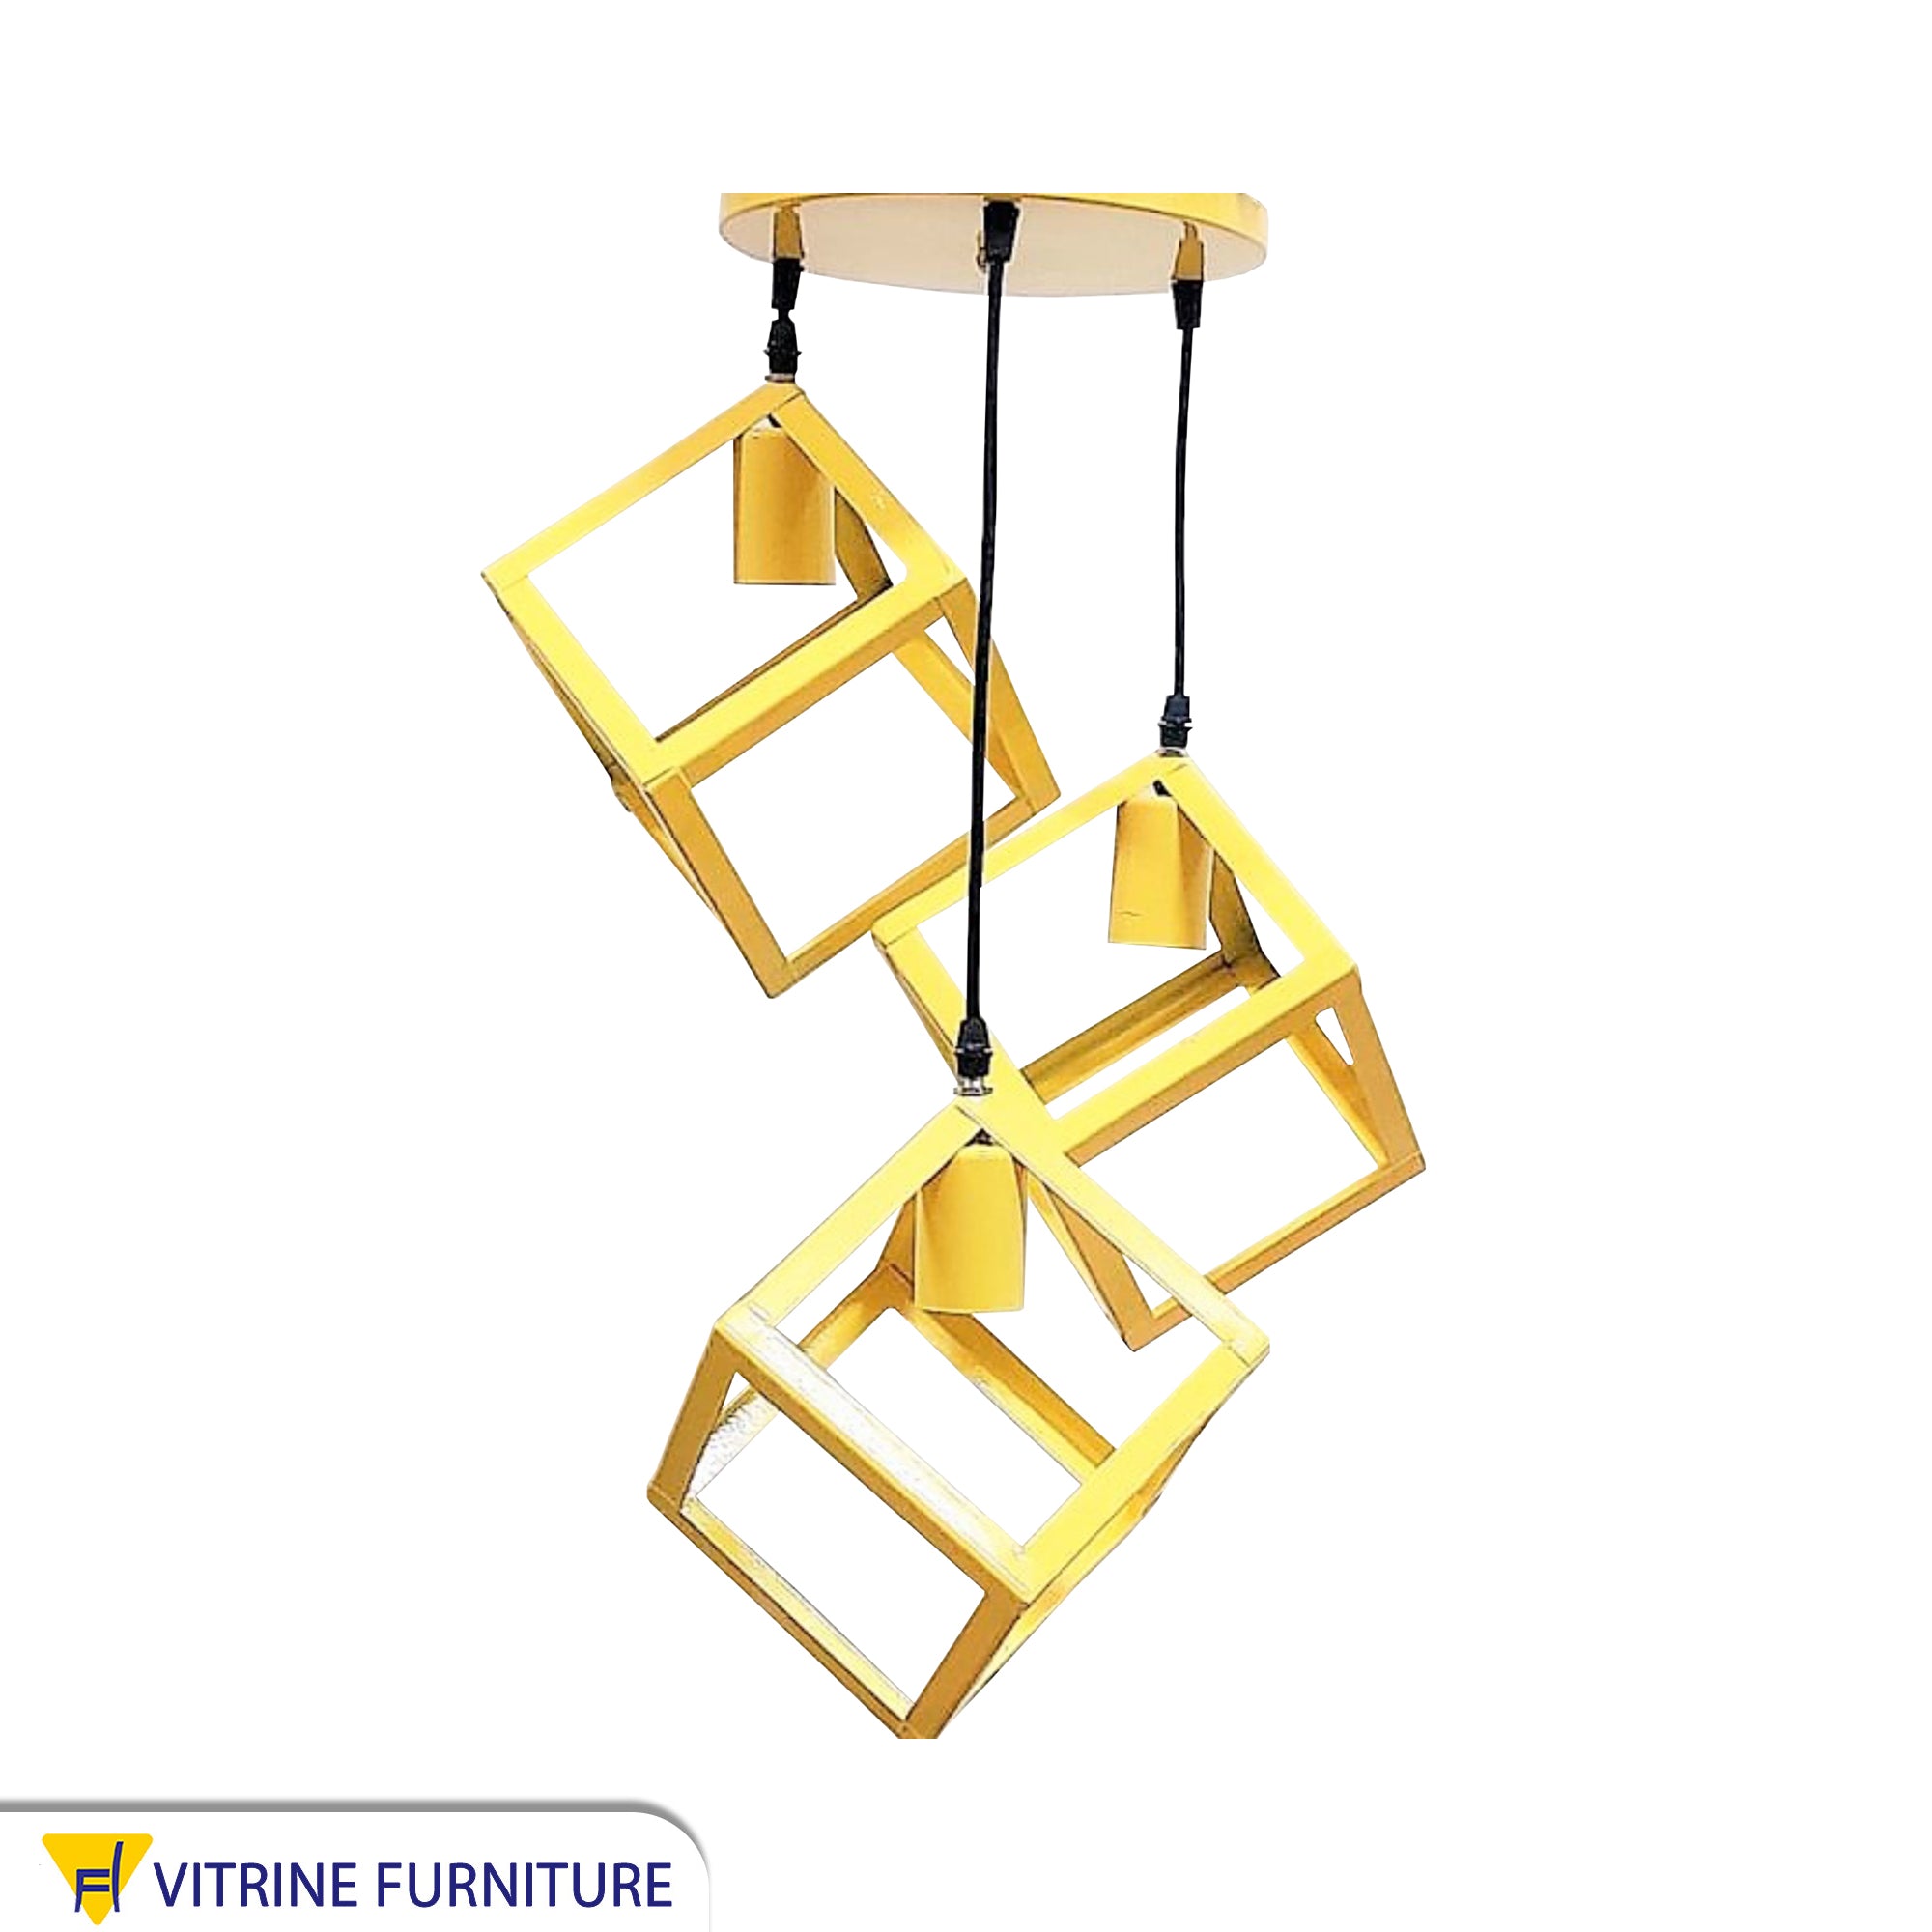 Yellow metal pendant chandelier, cubic shape